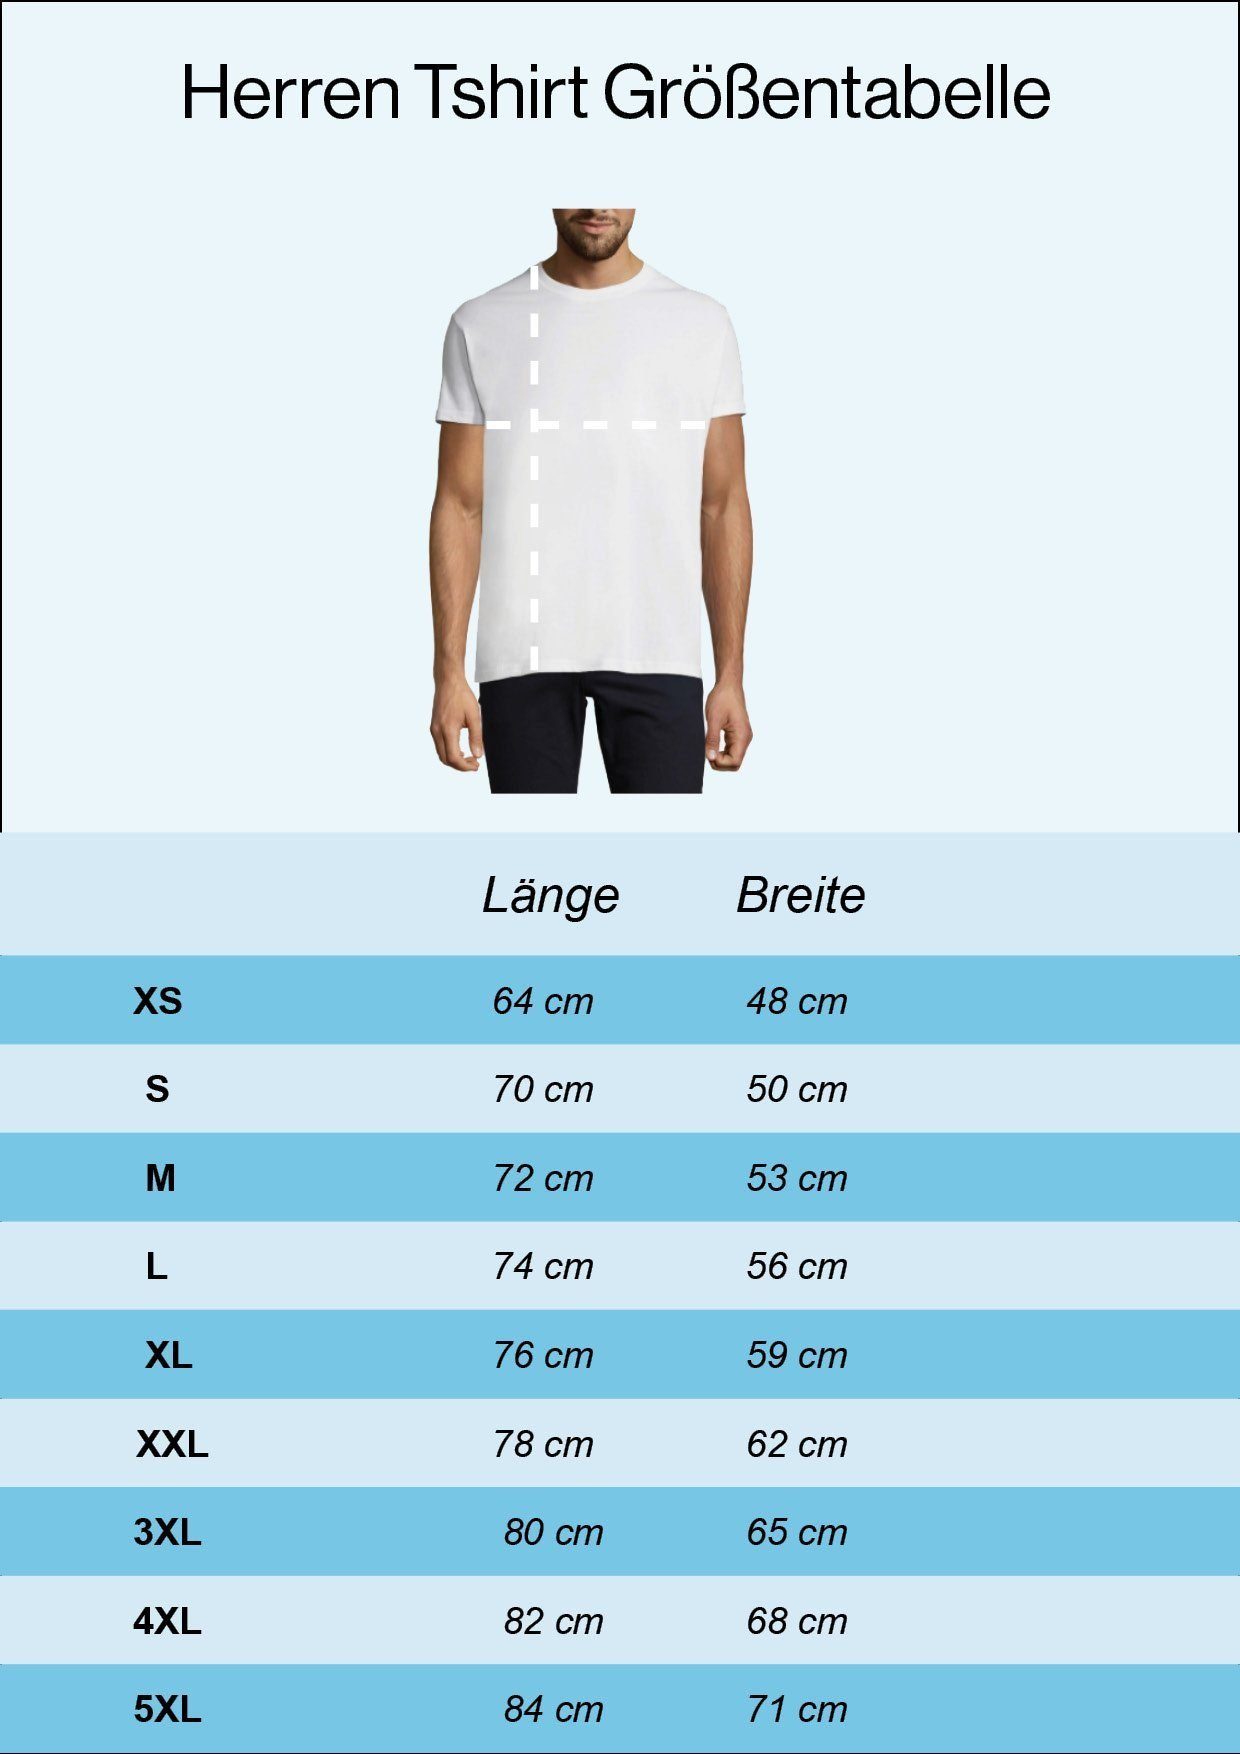 Youth Designz T-Shirt XO Herren T-shirt mit trendigem Frontprint